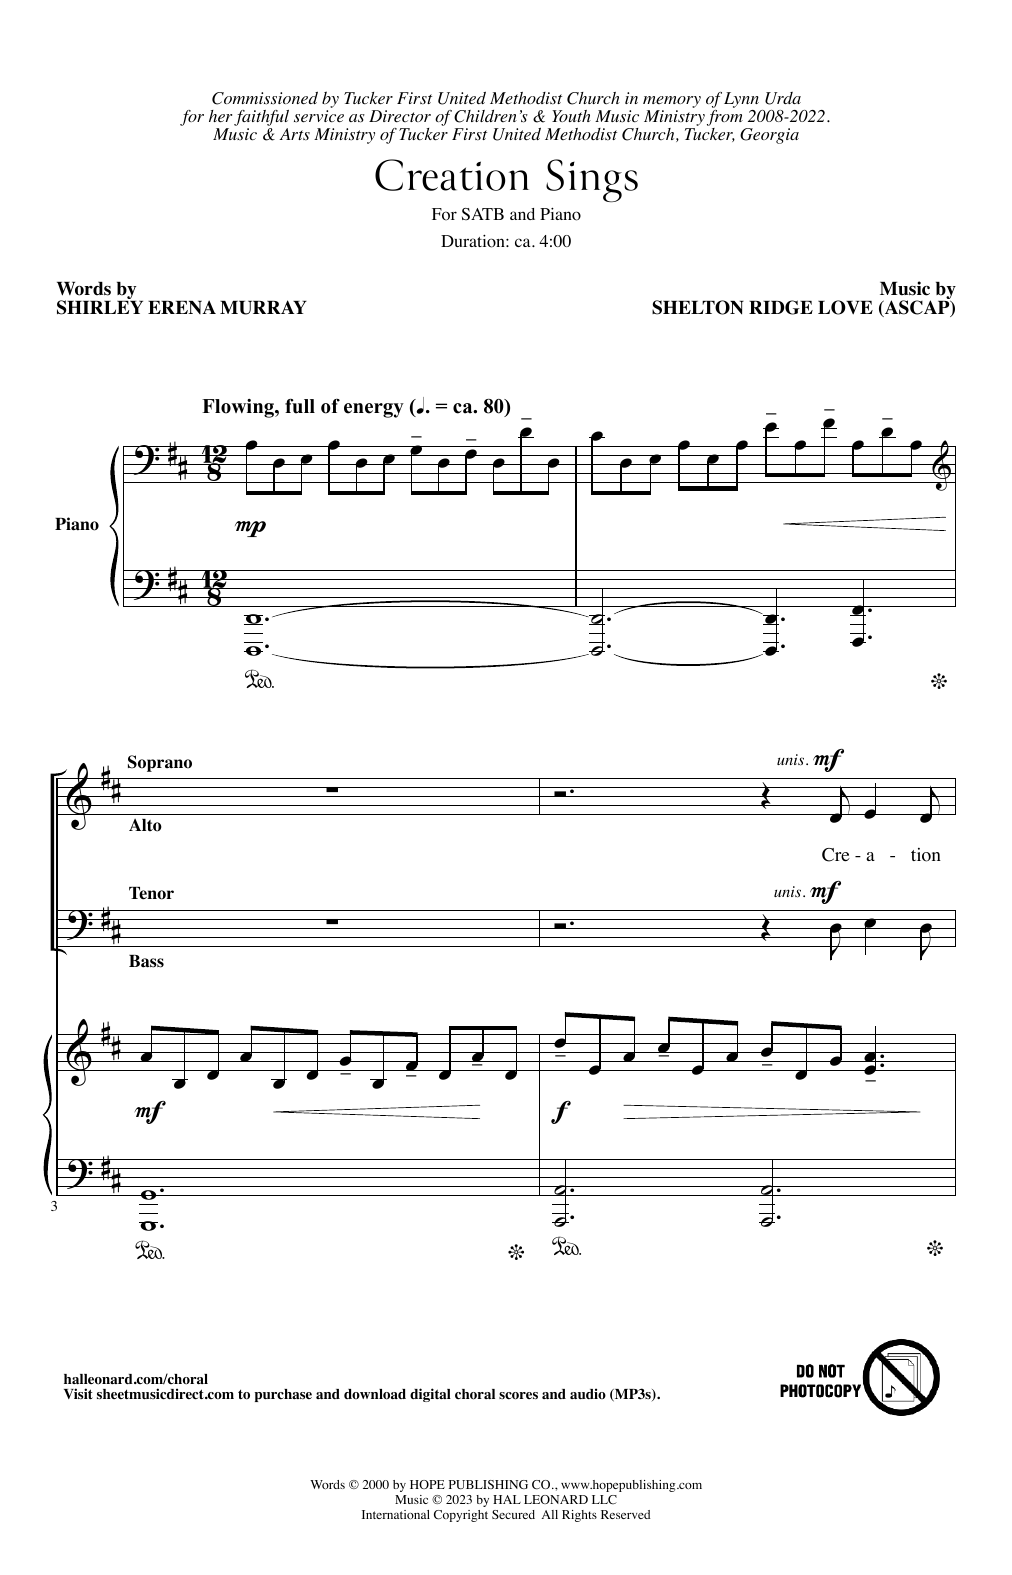 Shelton Ridge Love Creation Sings Sheet Music Notes & Chords for SATB Choir - Download or Print PDF